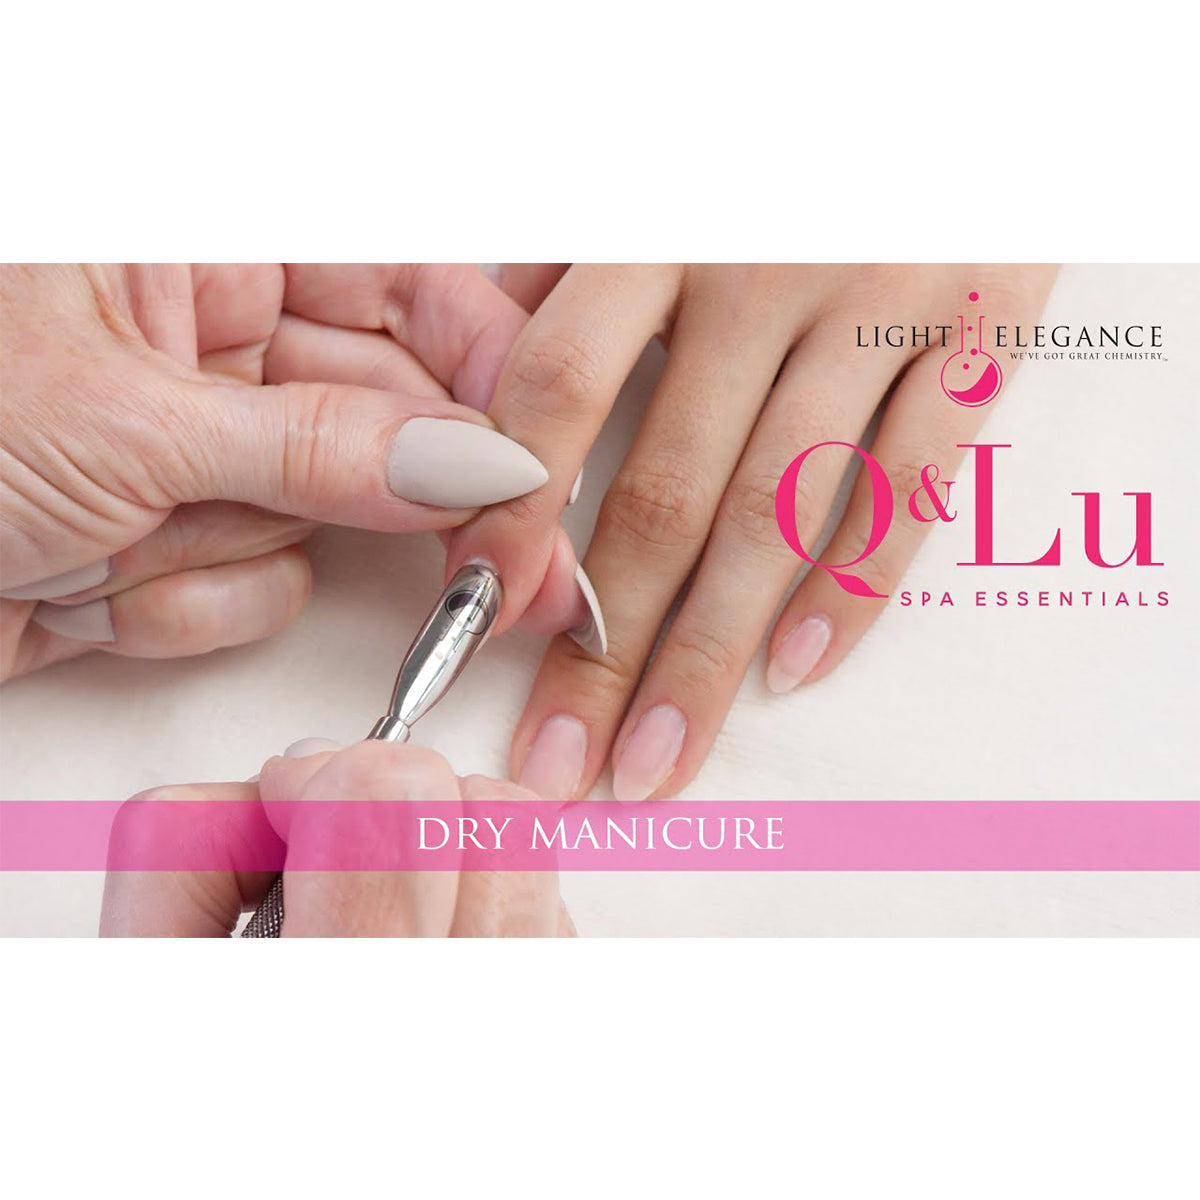 Dry Manicure Step-by-Step using Q&Lu Spa Essentials